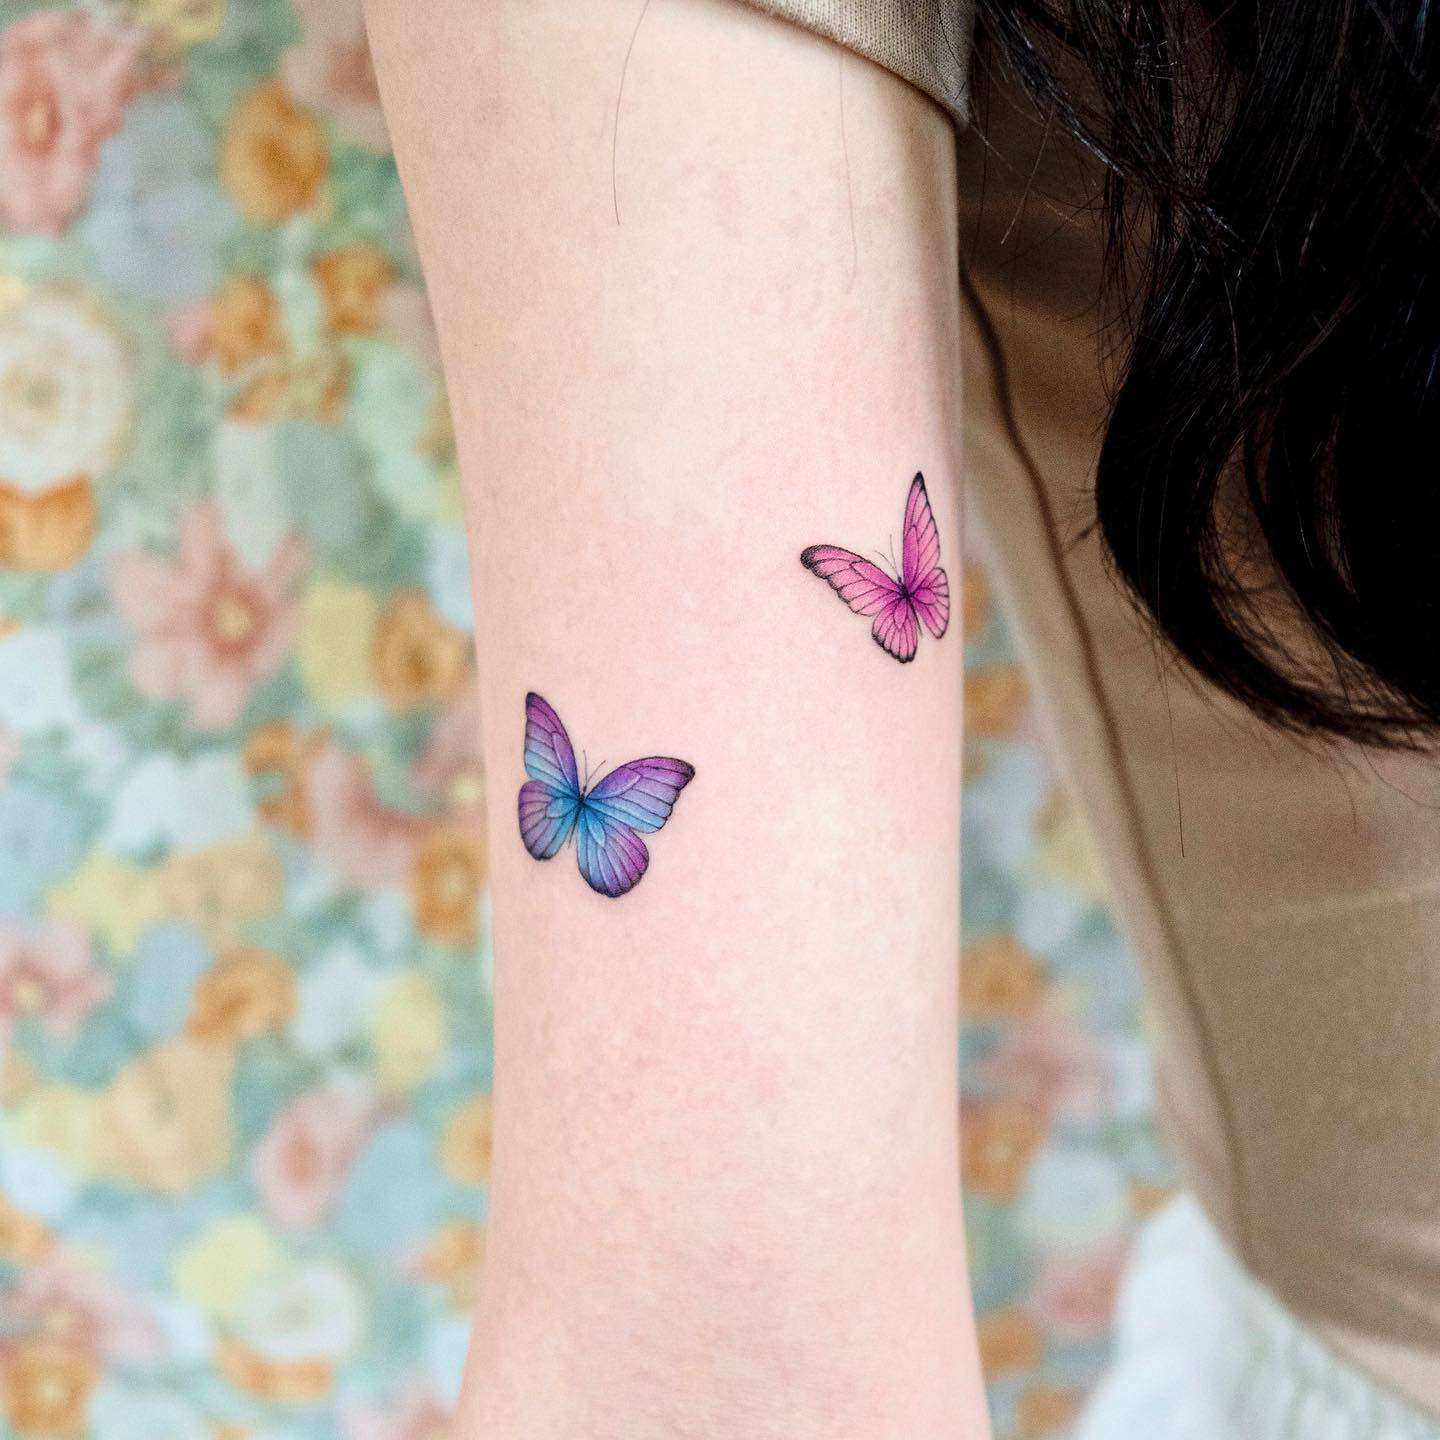 Purplr butterfly tattoo by coy.tattoo